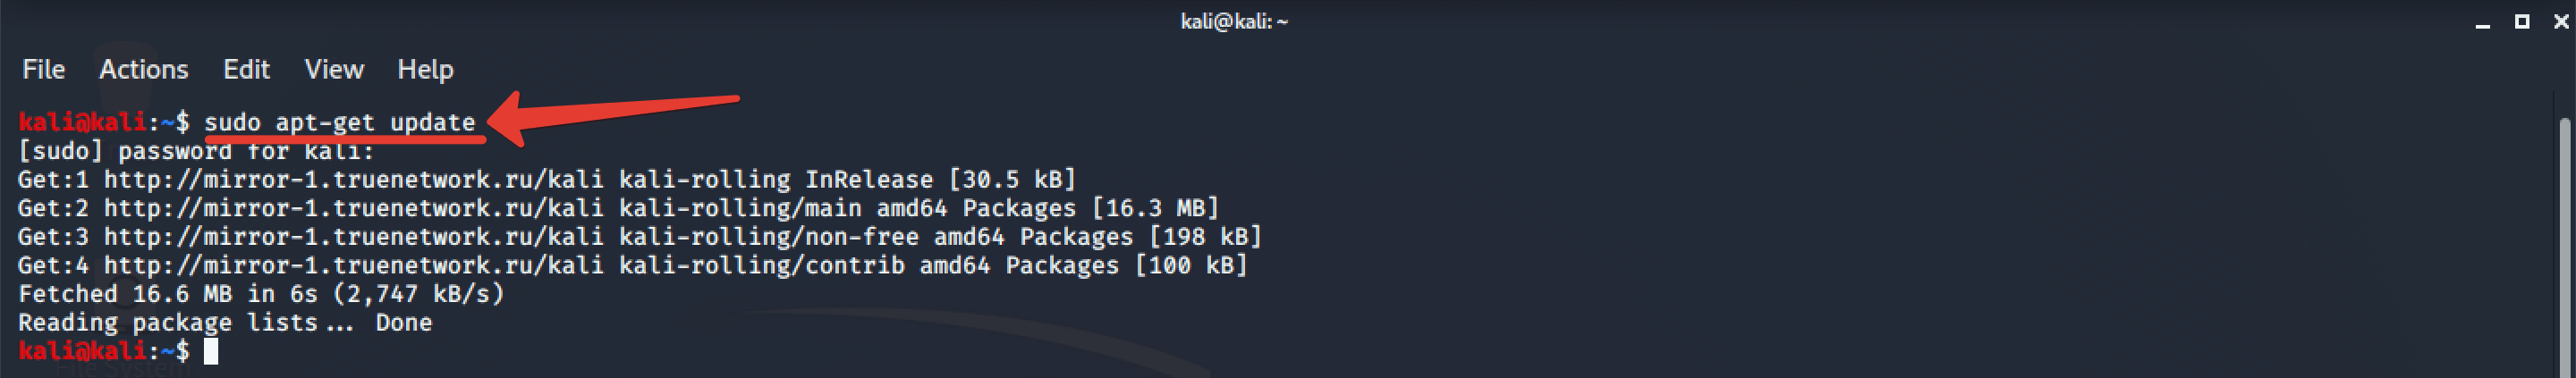 sAINT Kali Linux 2